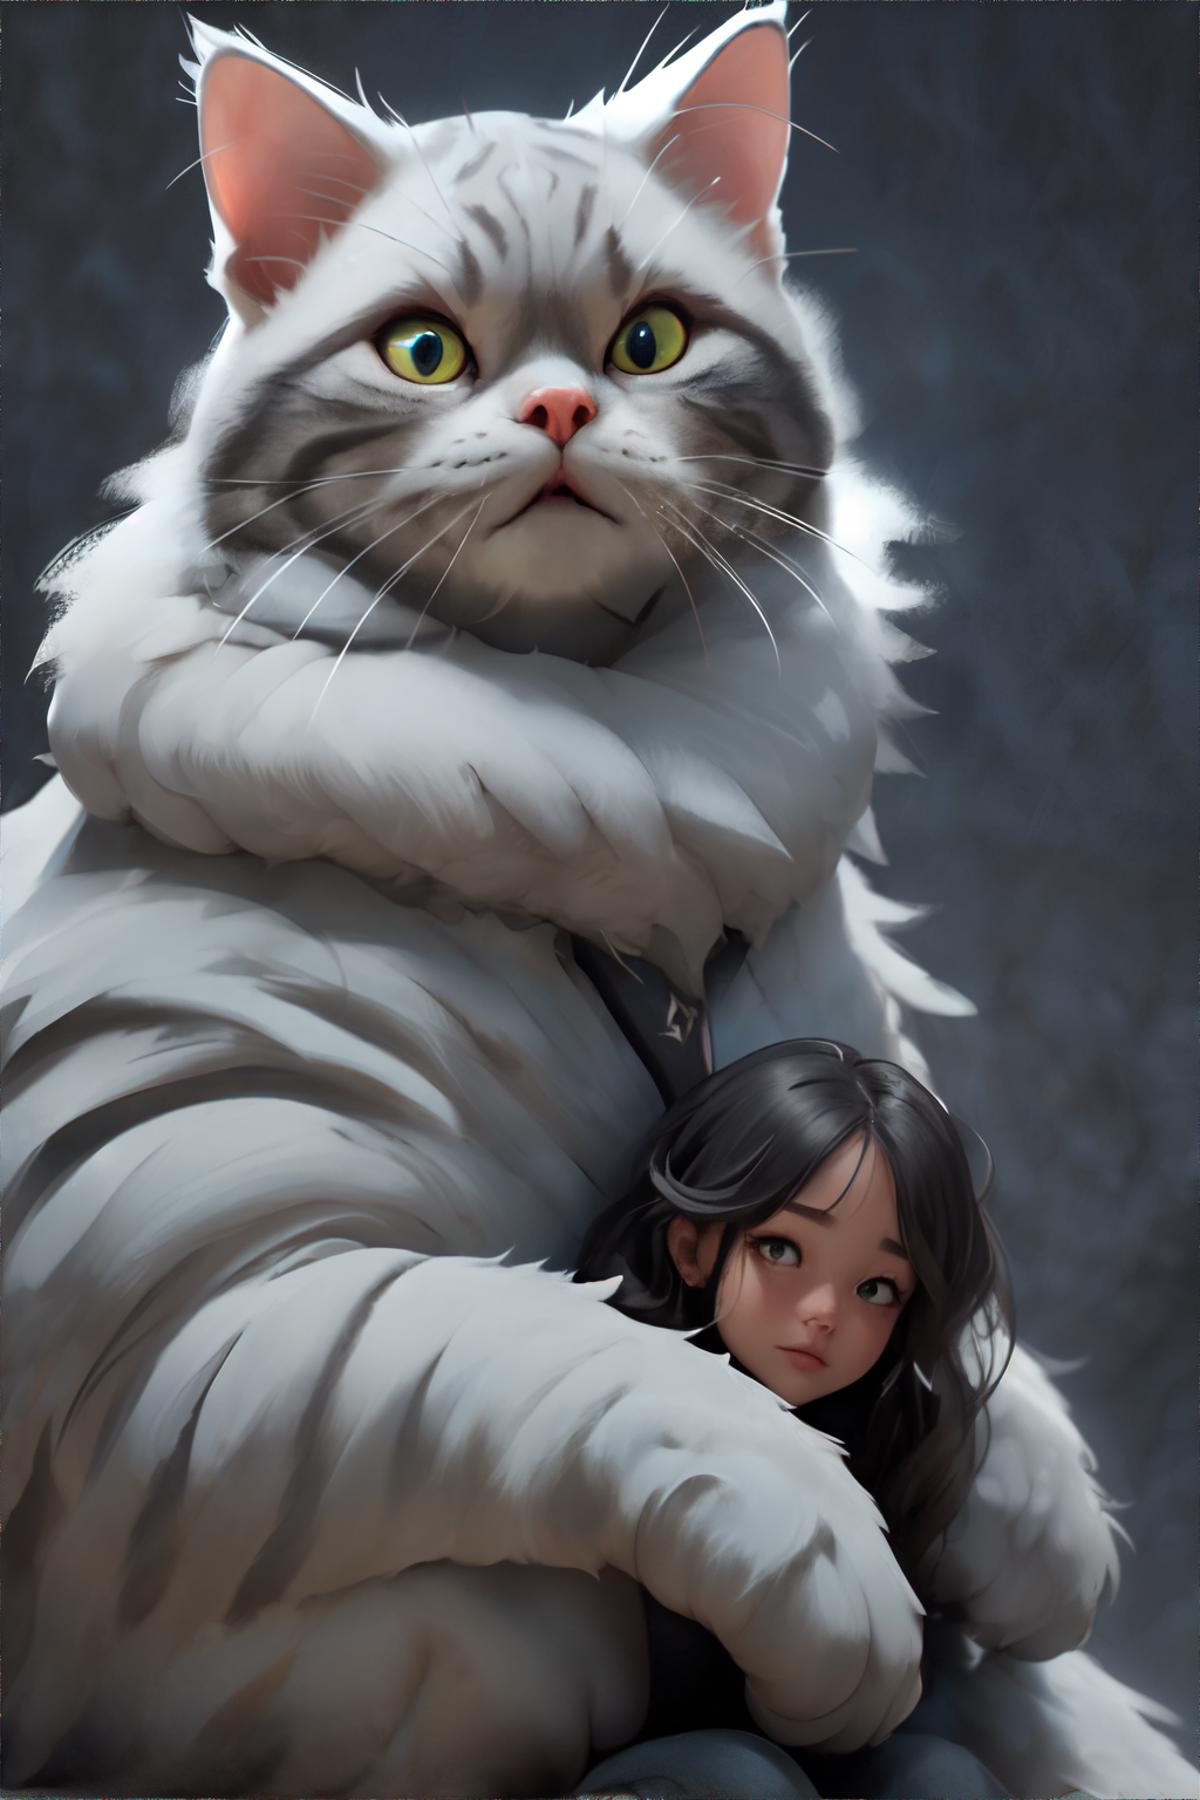 撸猫咯Giant cats image by bzlibby